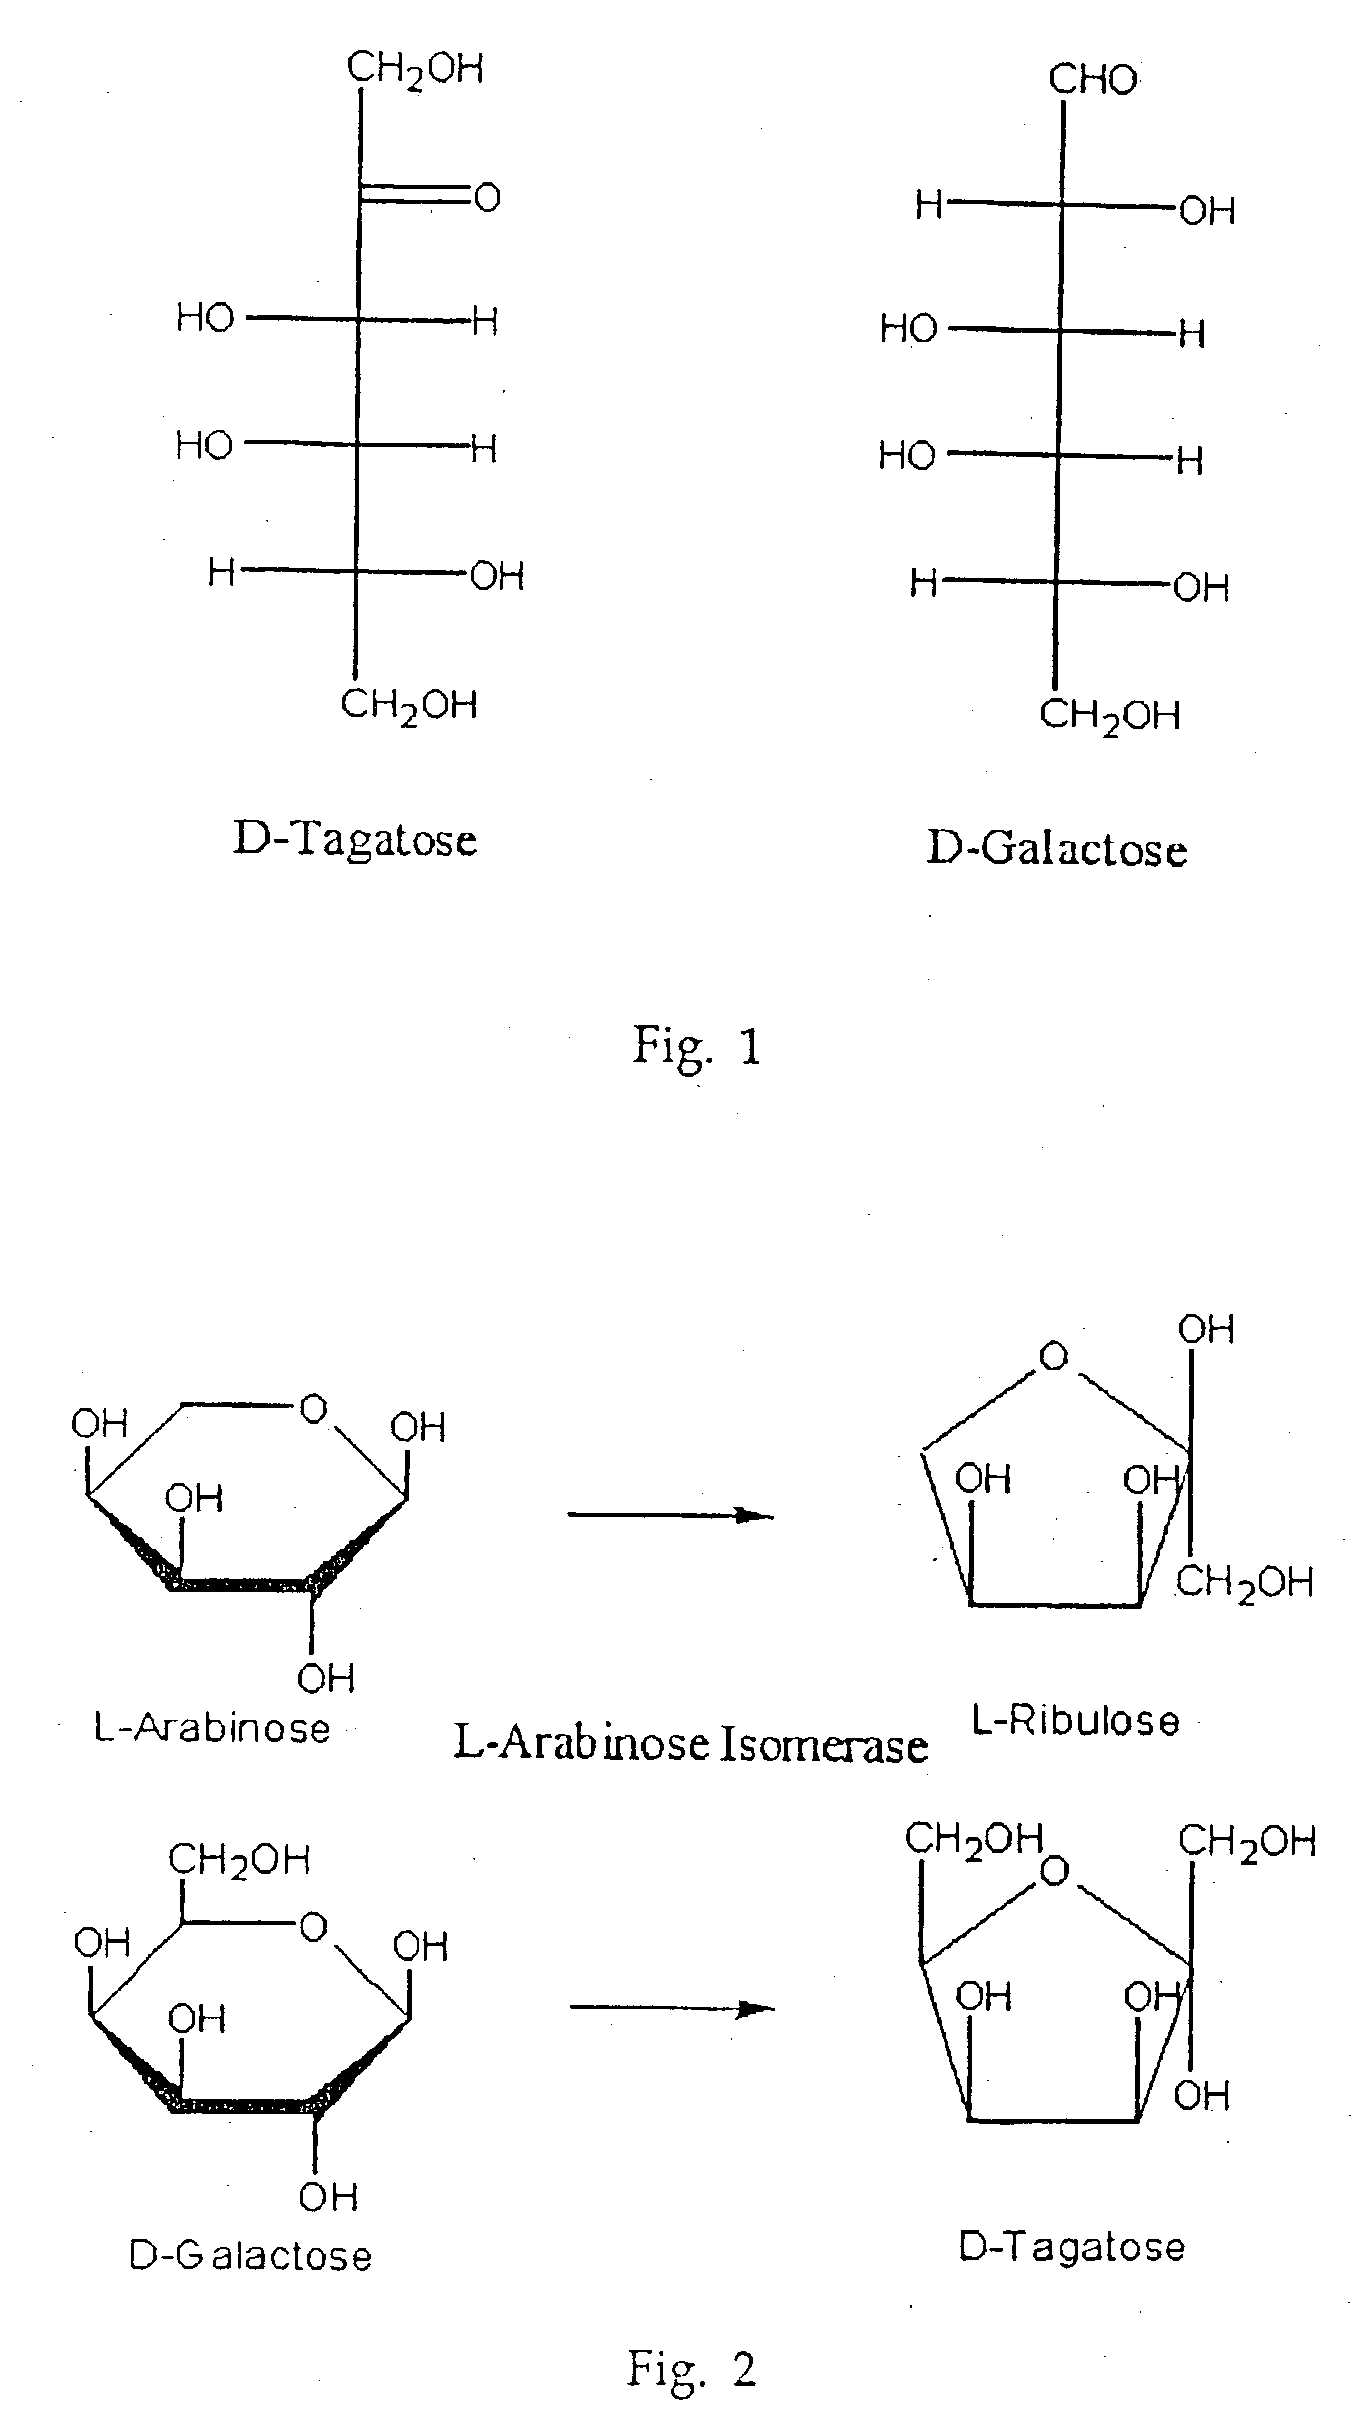 Biological tagatose production by recombinant Escherichia coli